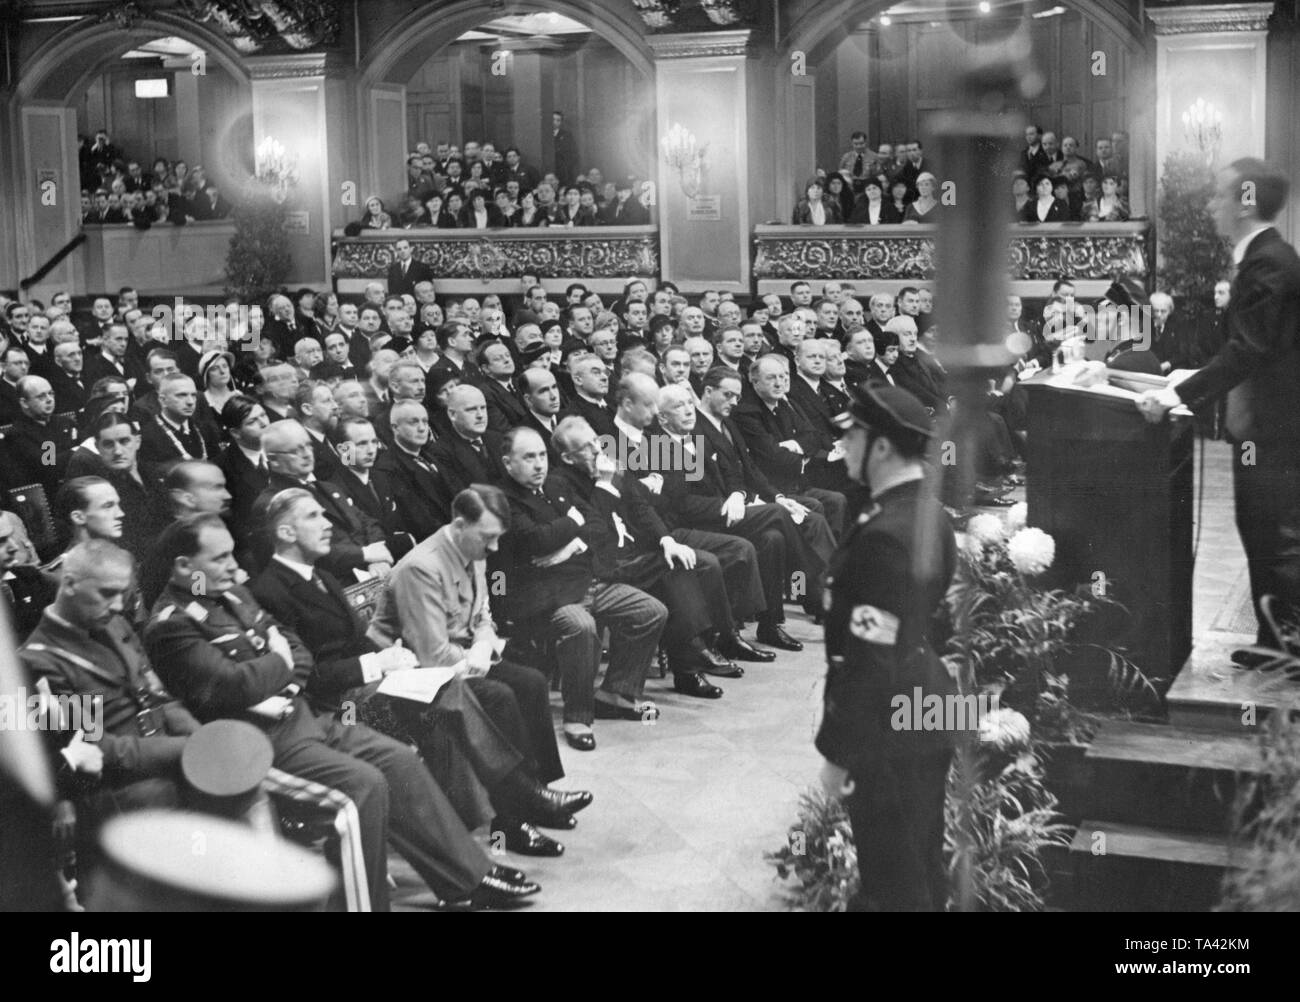 First row from left to right: Hermann Goering, Deputy Chancellor Franz von Papen, exhausted Adolf Hitler, Walther Funk, Hans Pfitzner, Wilhelm Furtwangler, Richard Strauss. Stock Photo